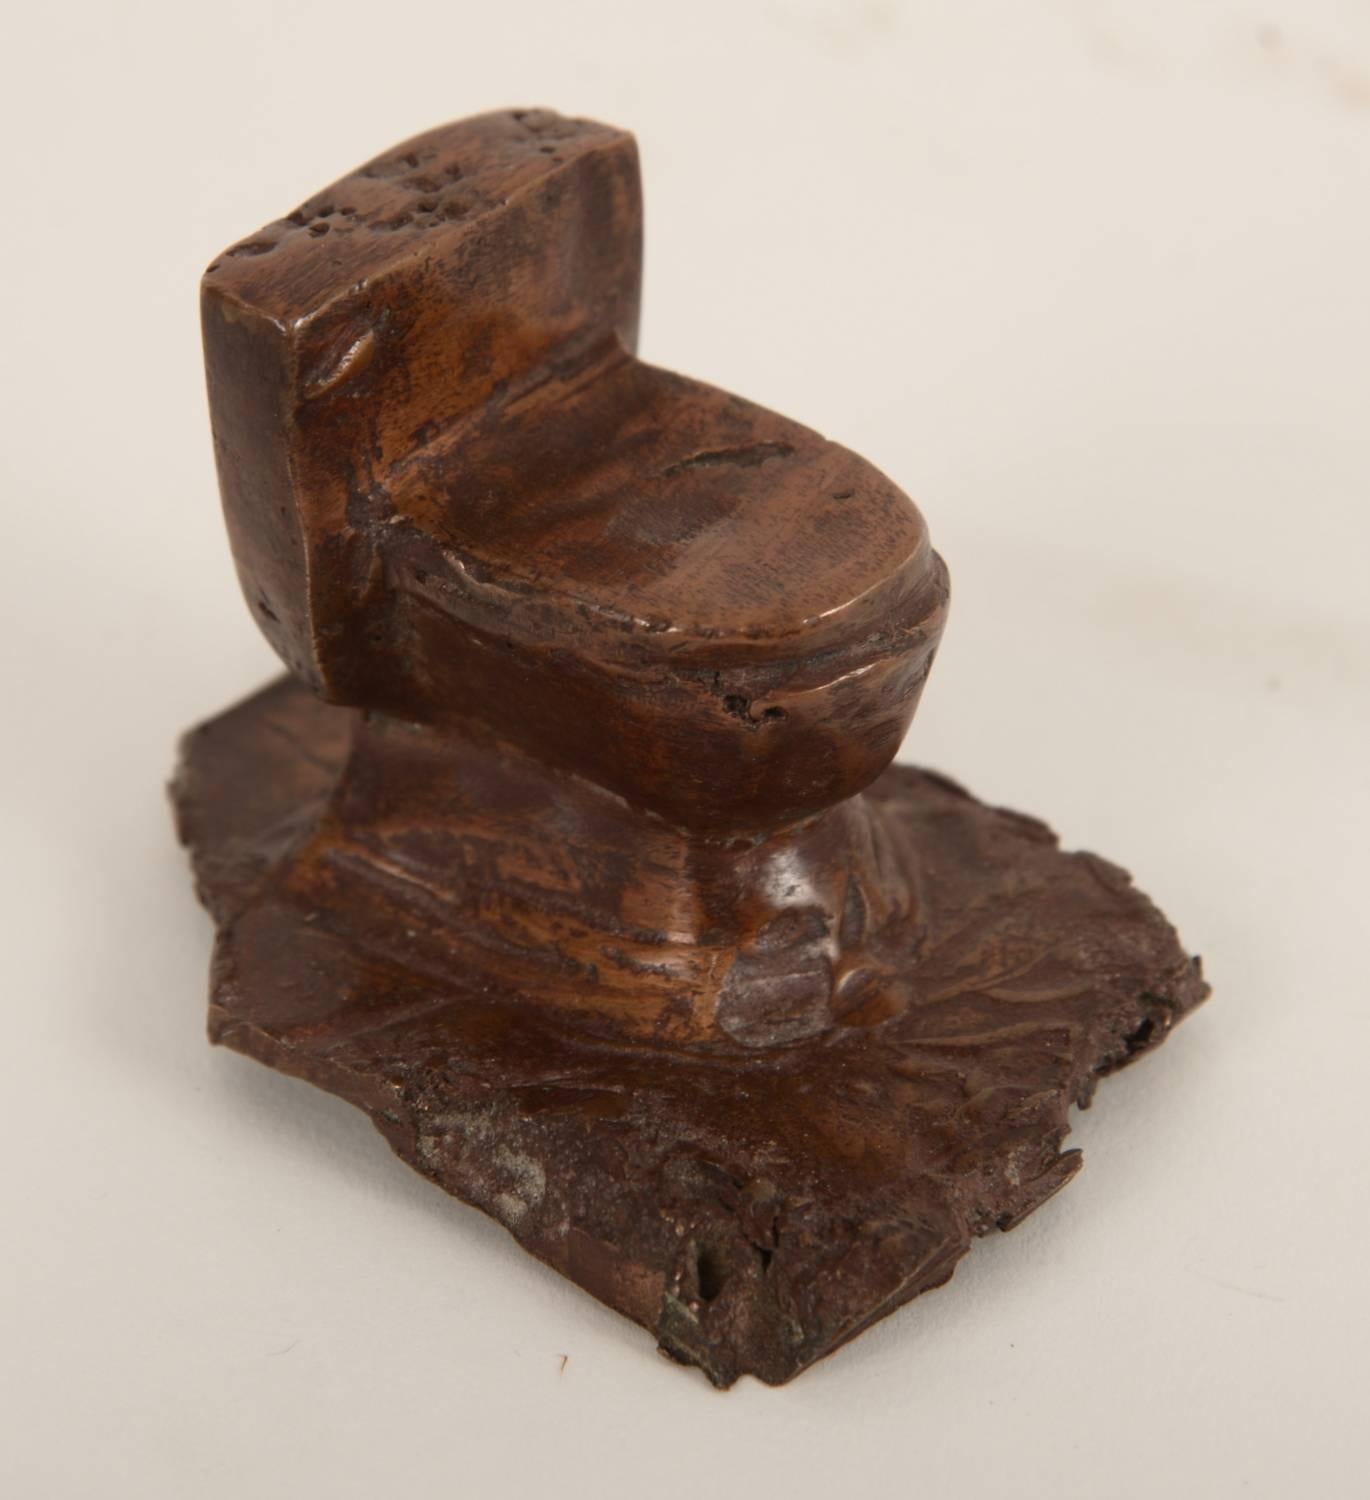 Solid miniature cast bronze toilet.